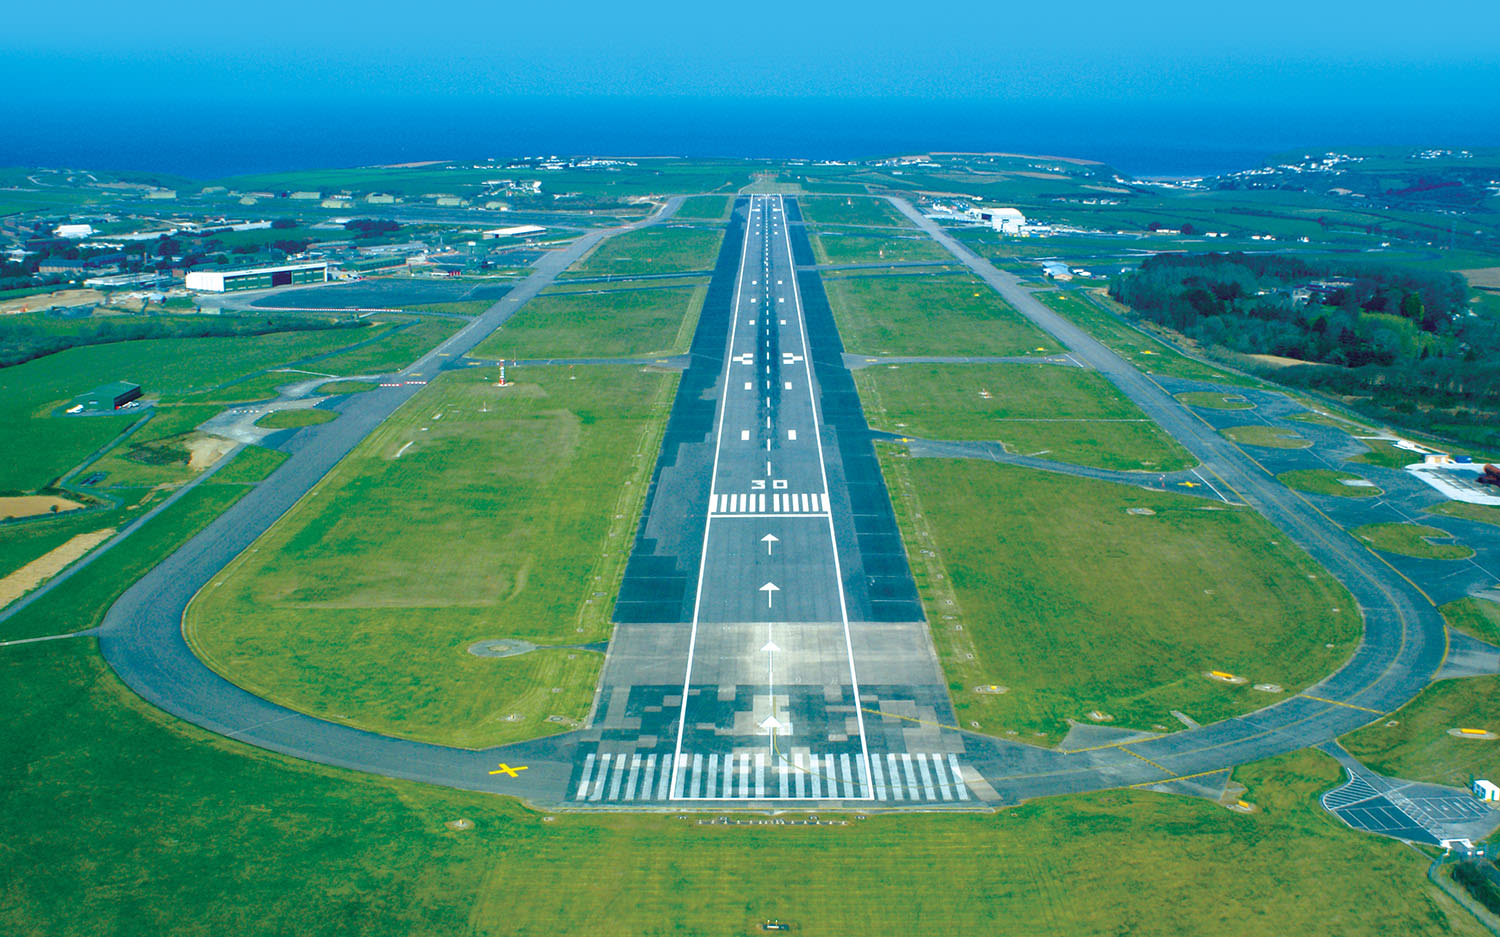 The runway at Spaceport Cornwall